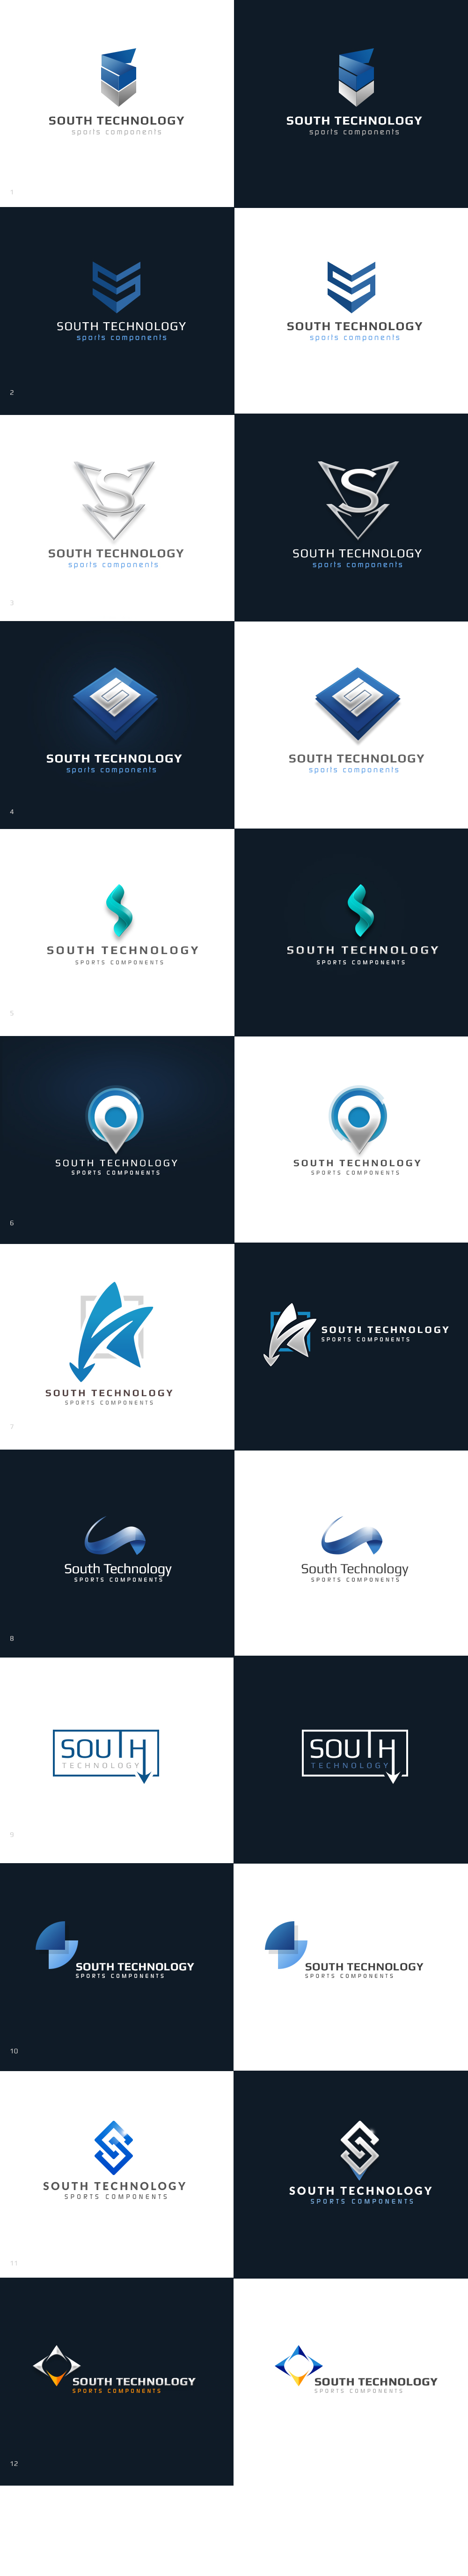 southtech_logos_